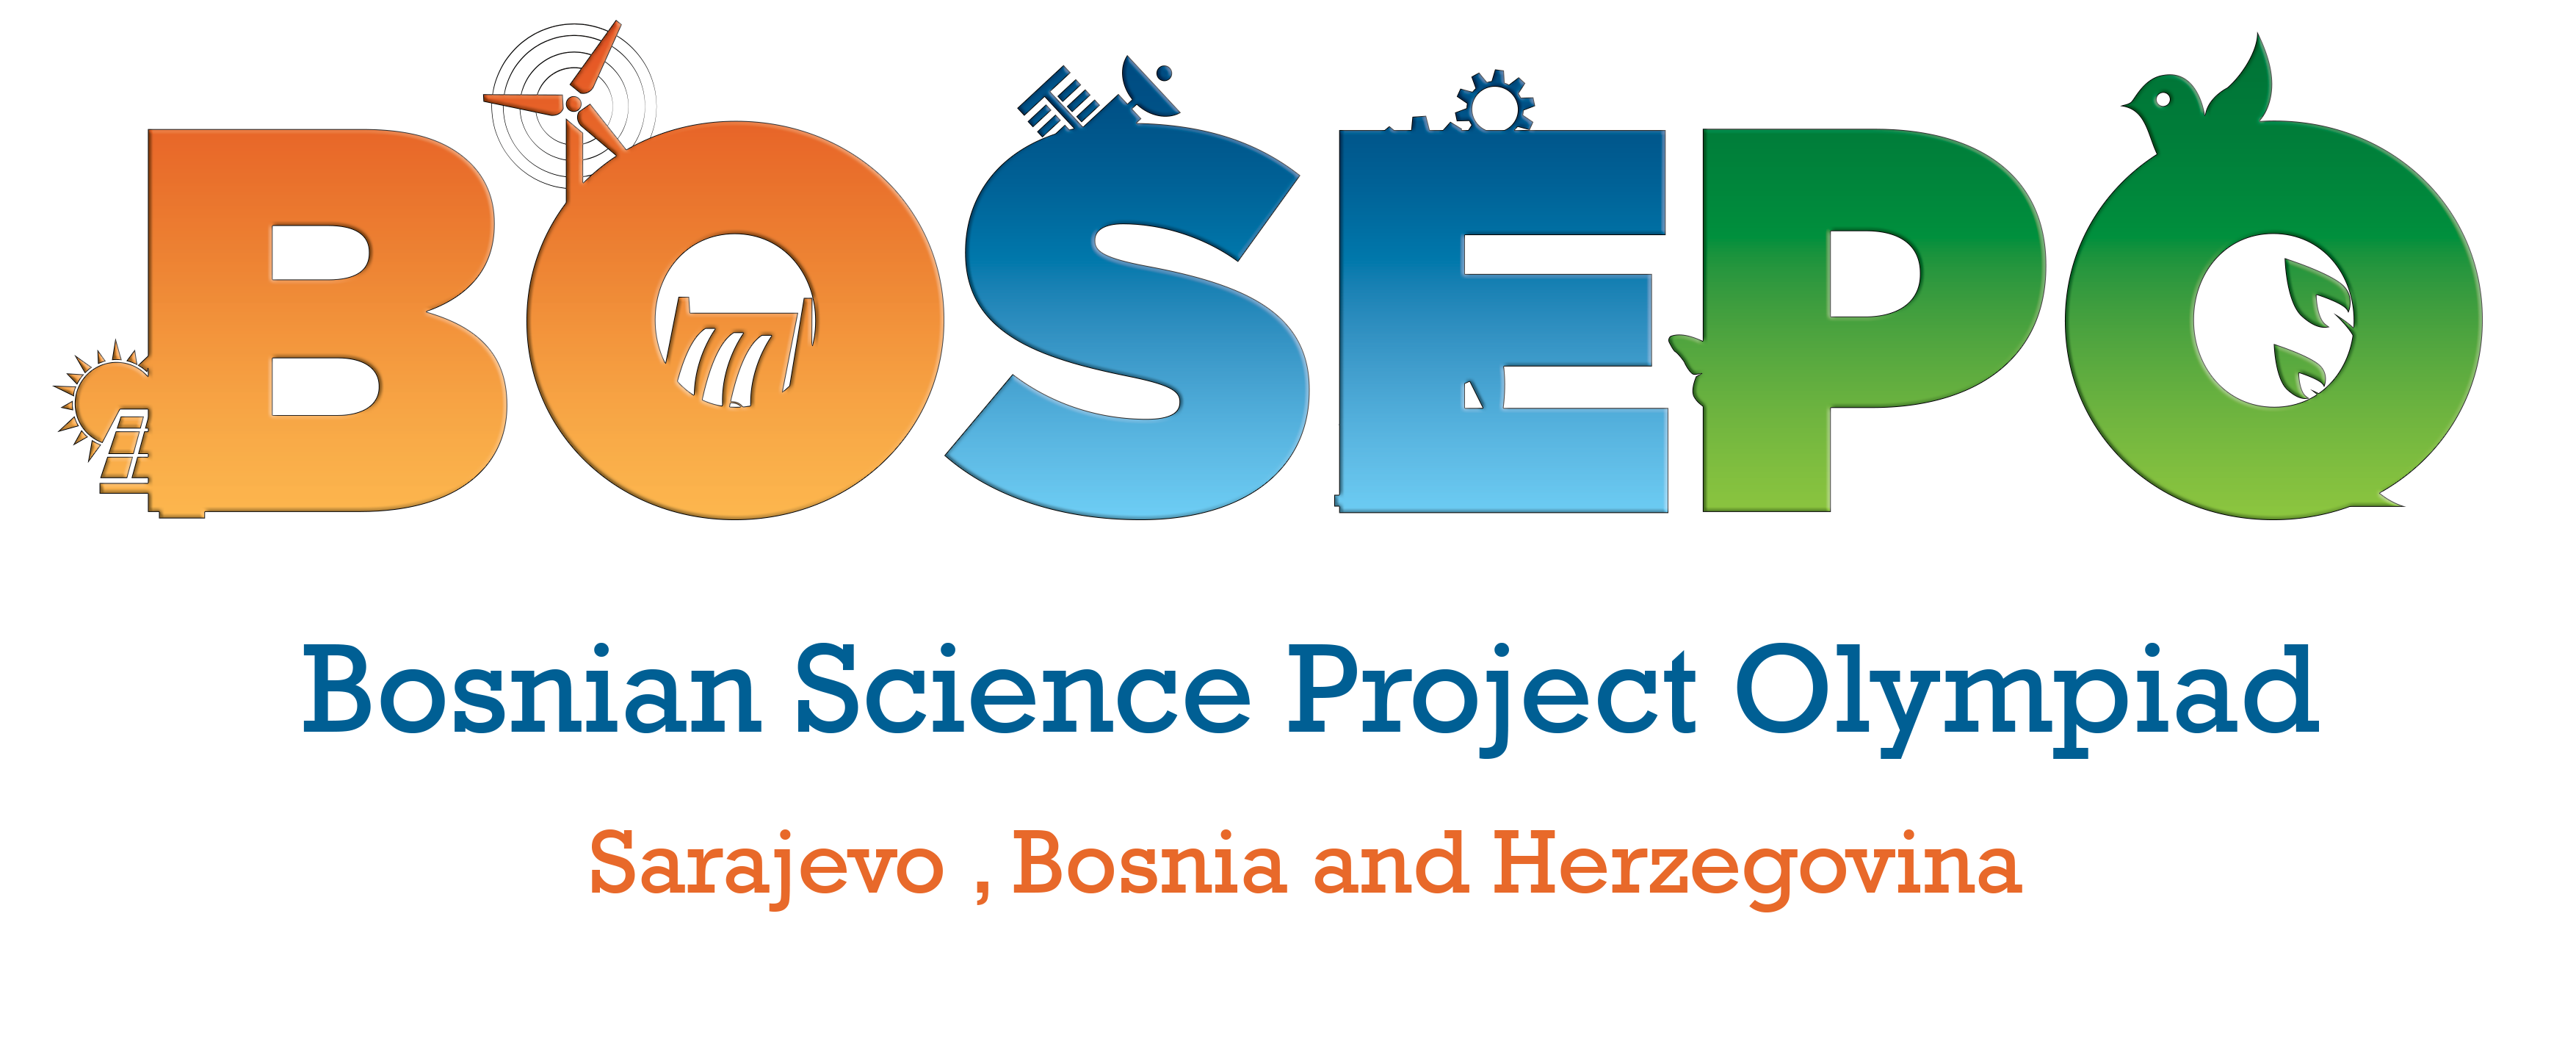 Bosepo logo